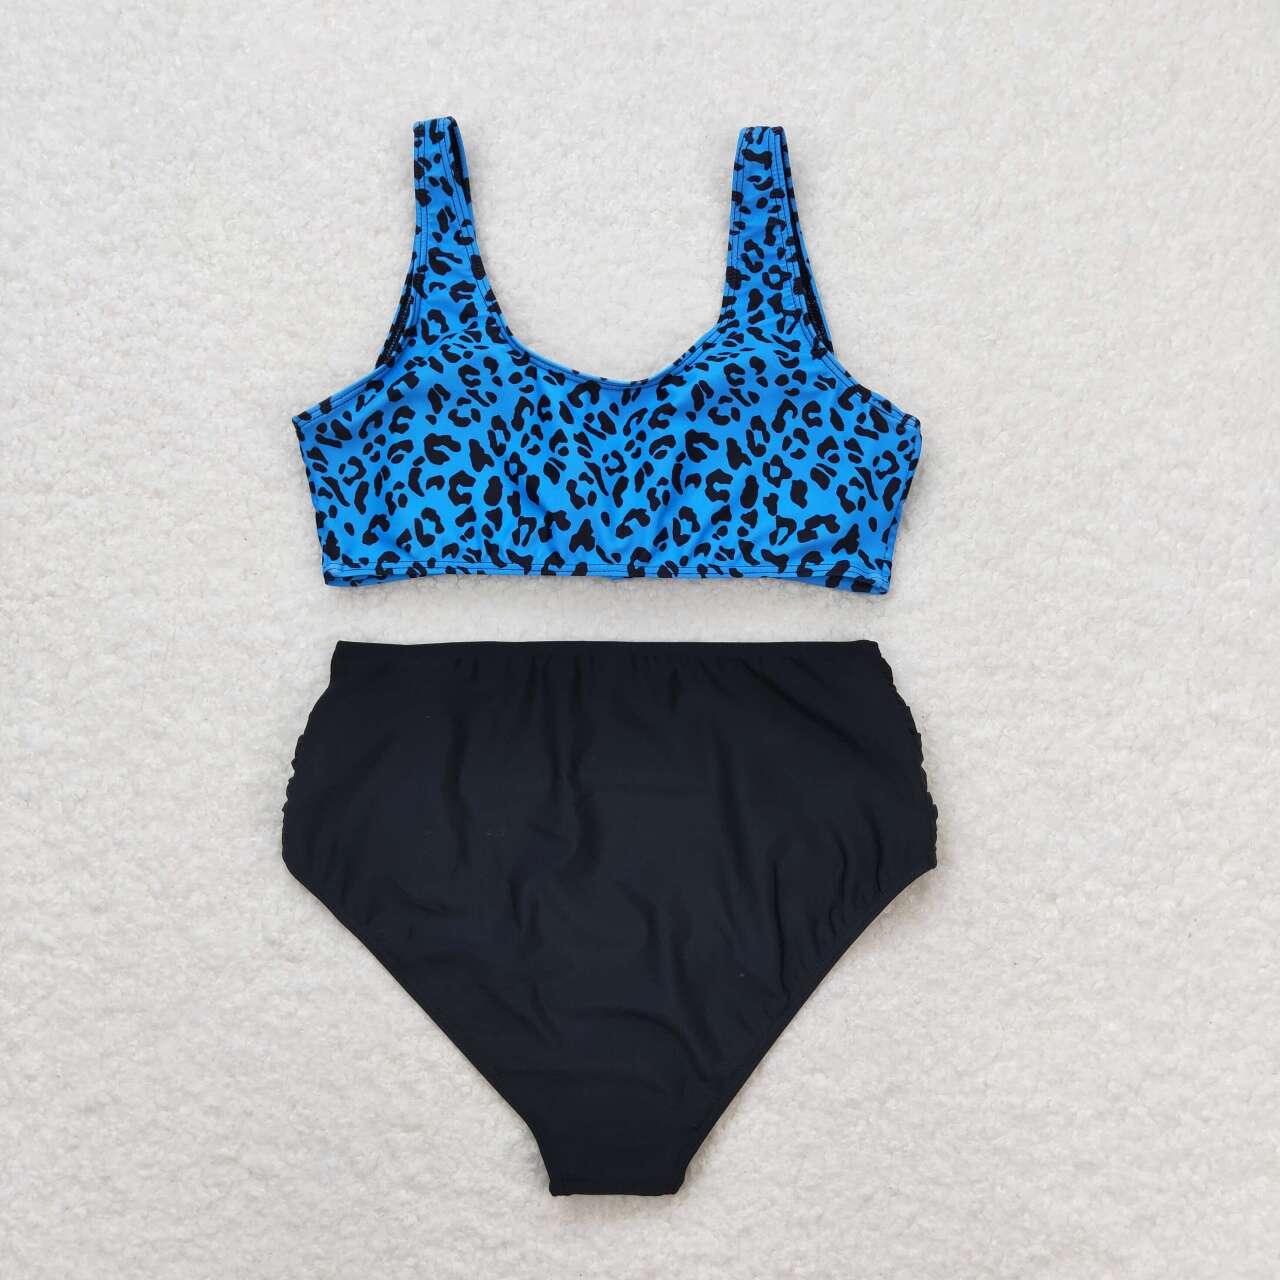 S0290 Adult Blue Leopard Top Black Trunks Woman 2 Pieces Swimsuits